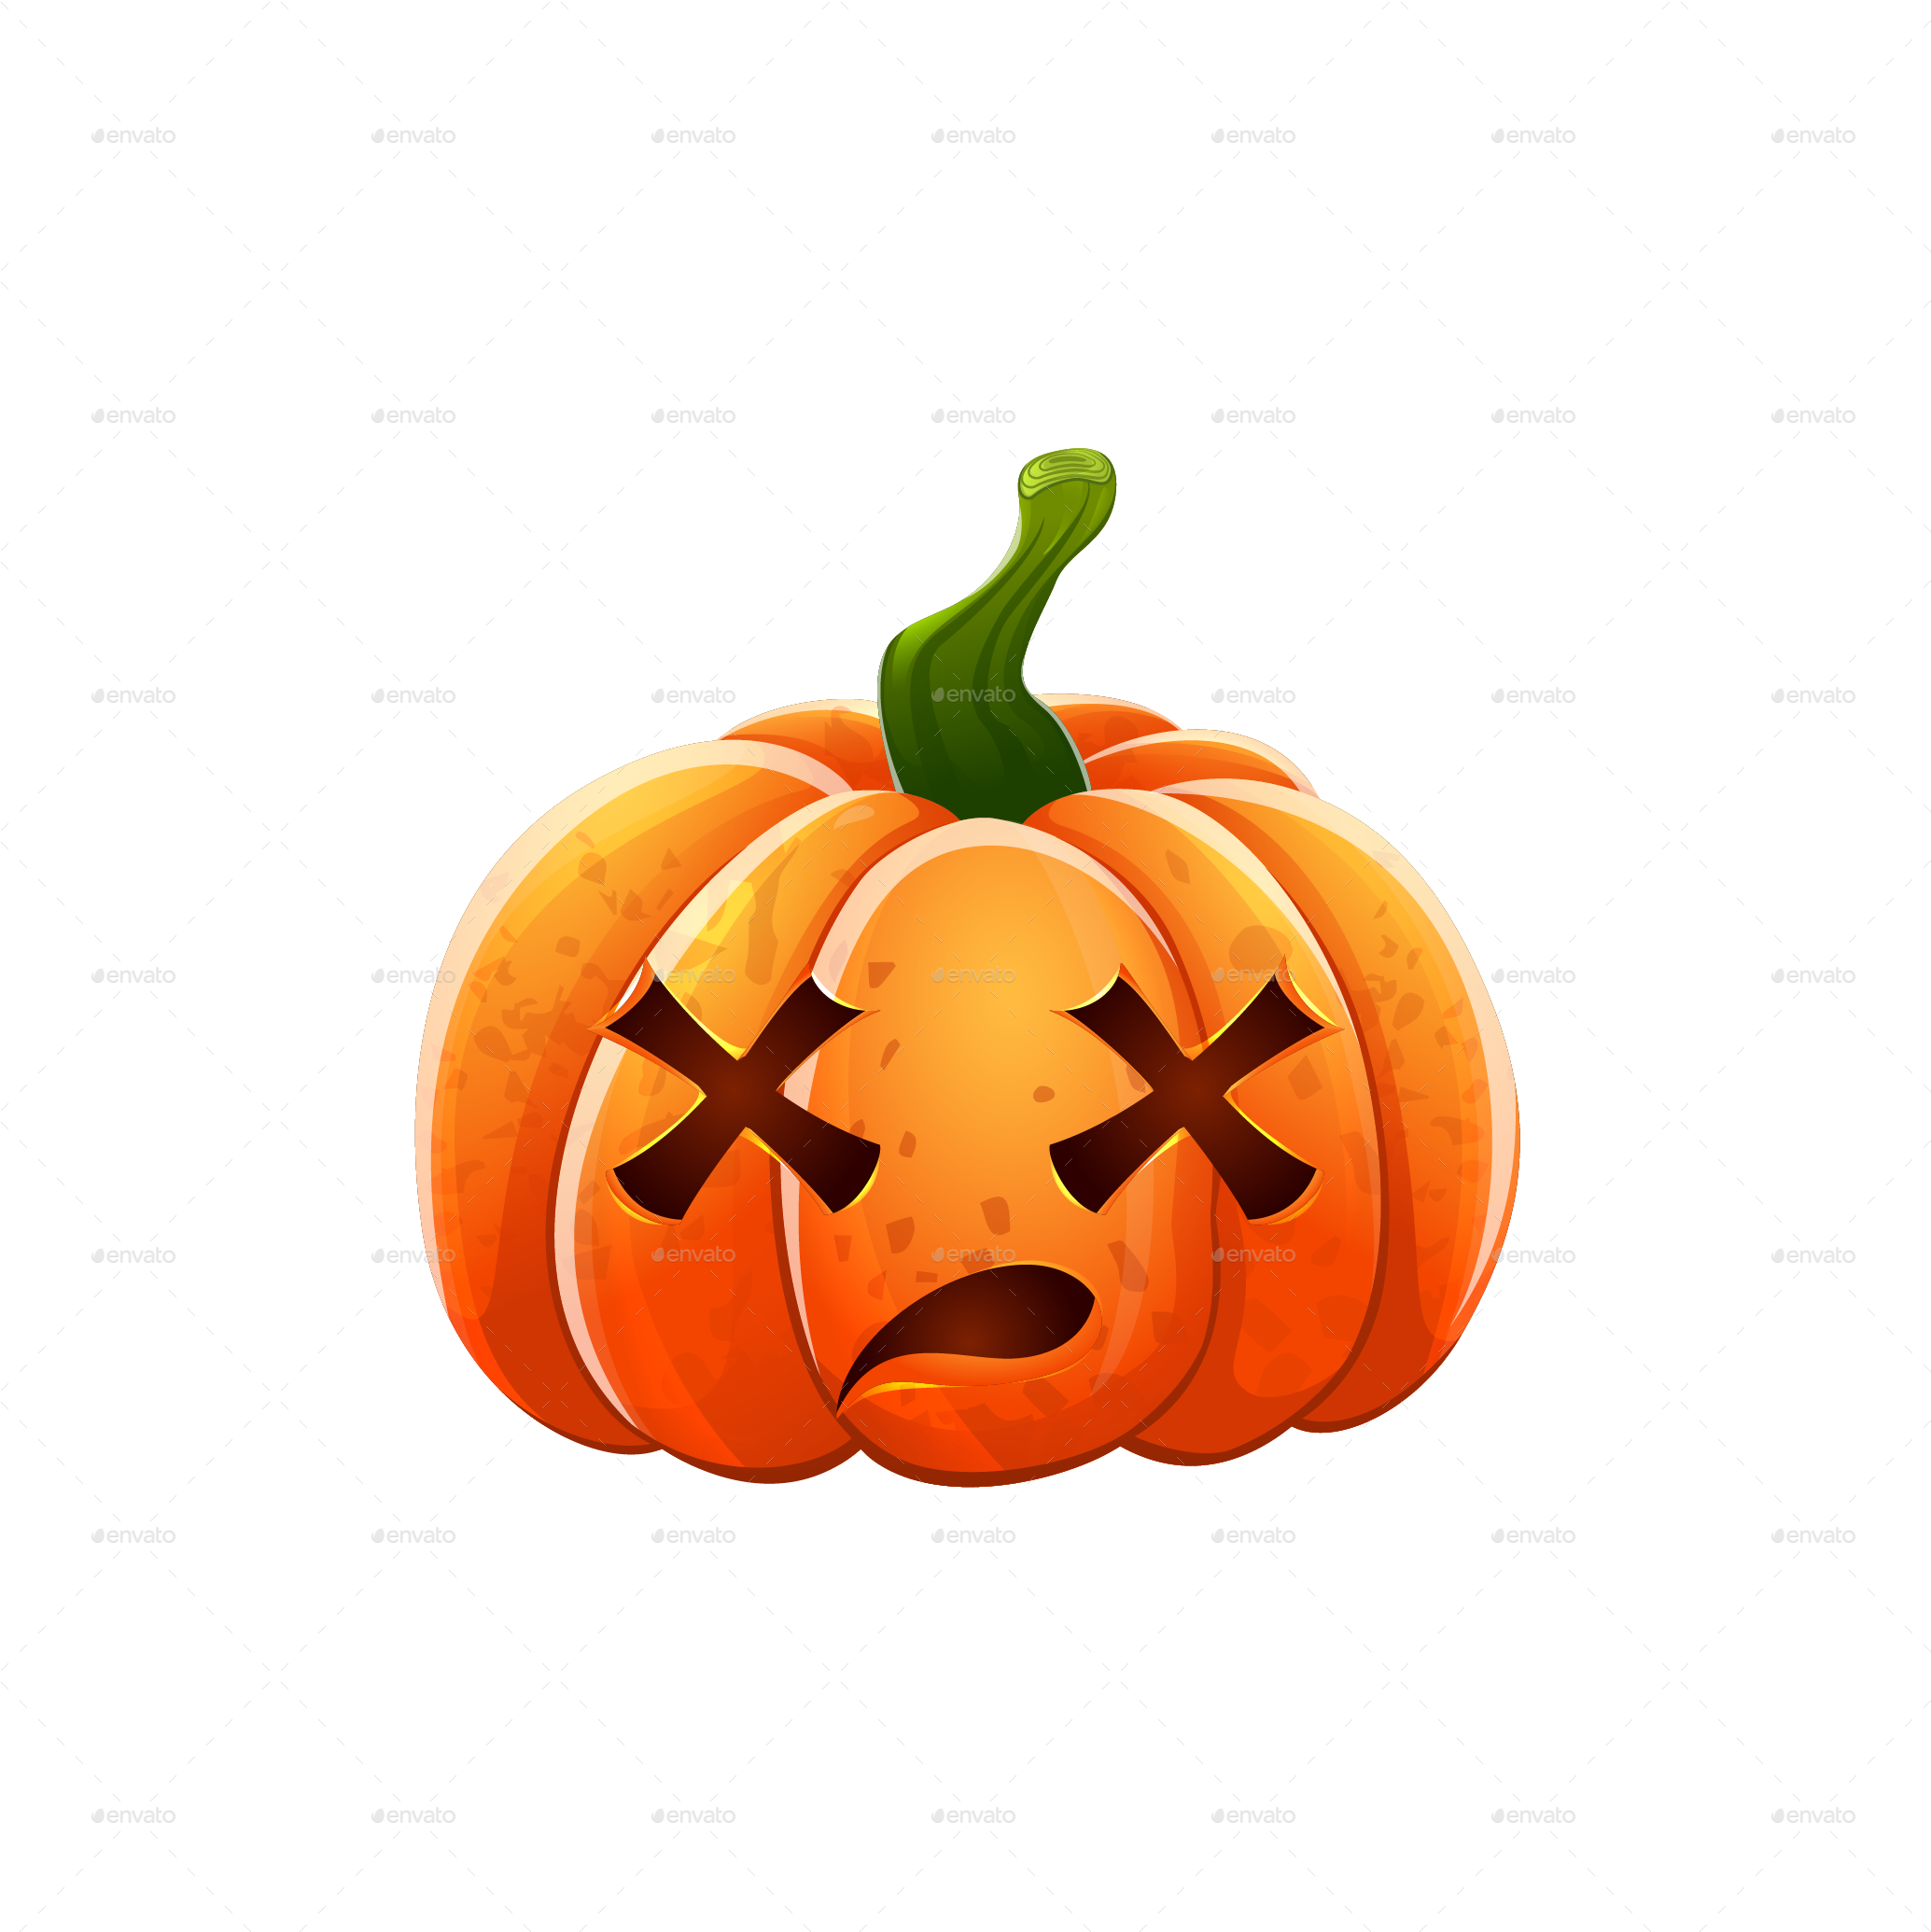 Fainted Pumpkin Halloween Graphic